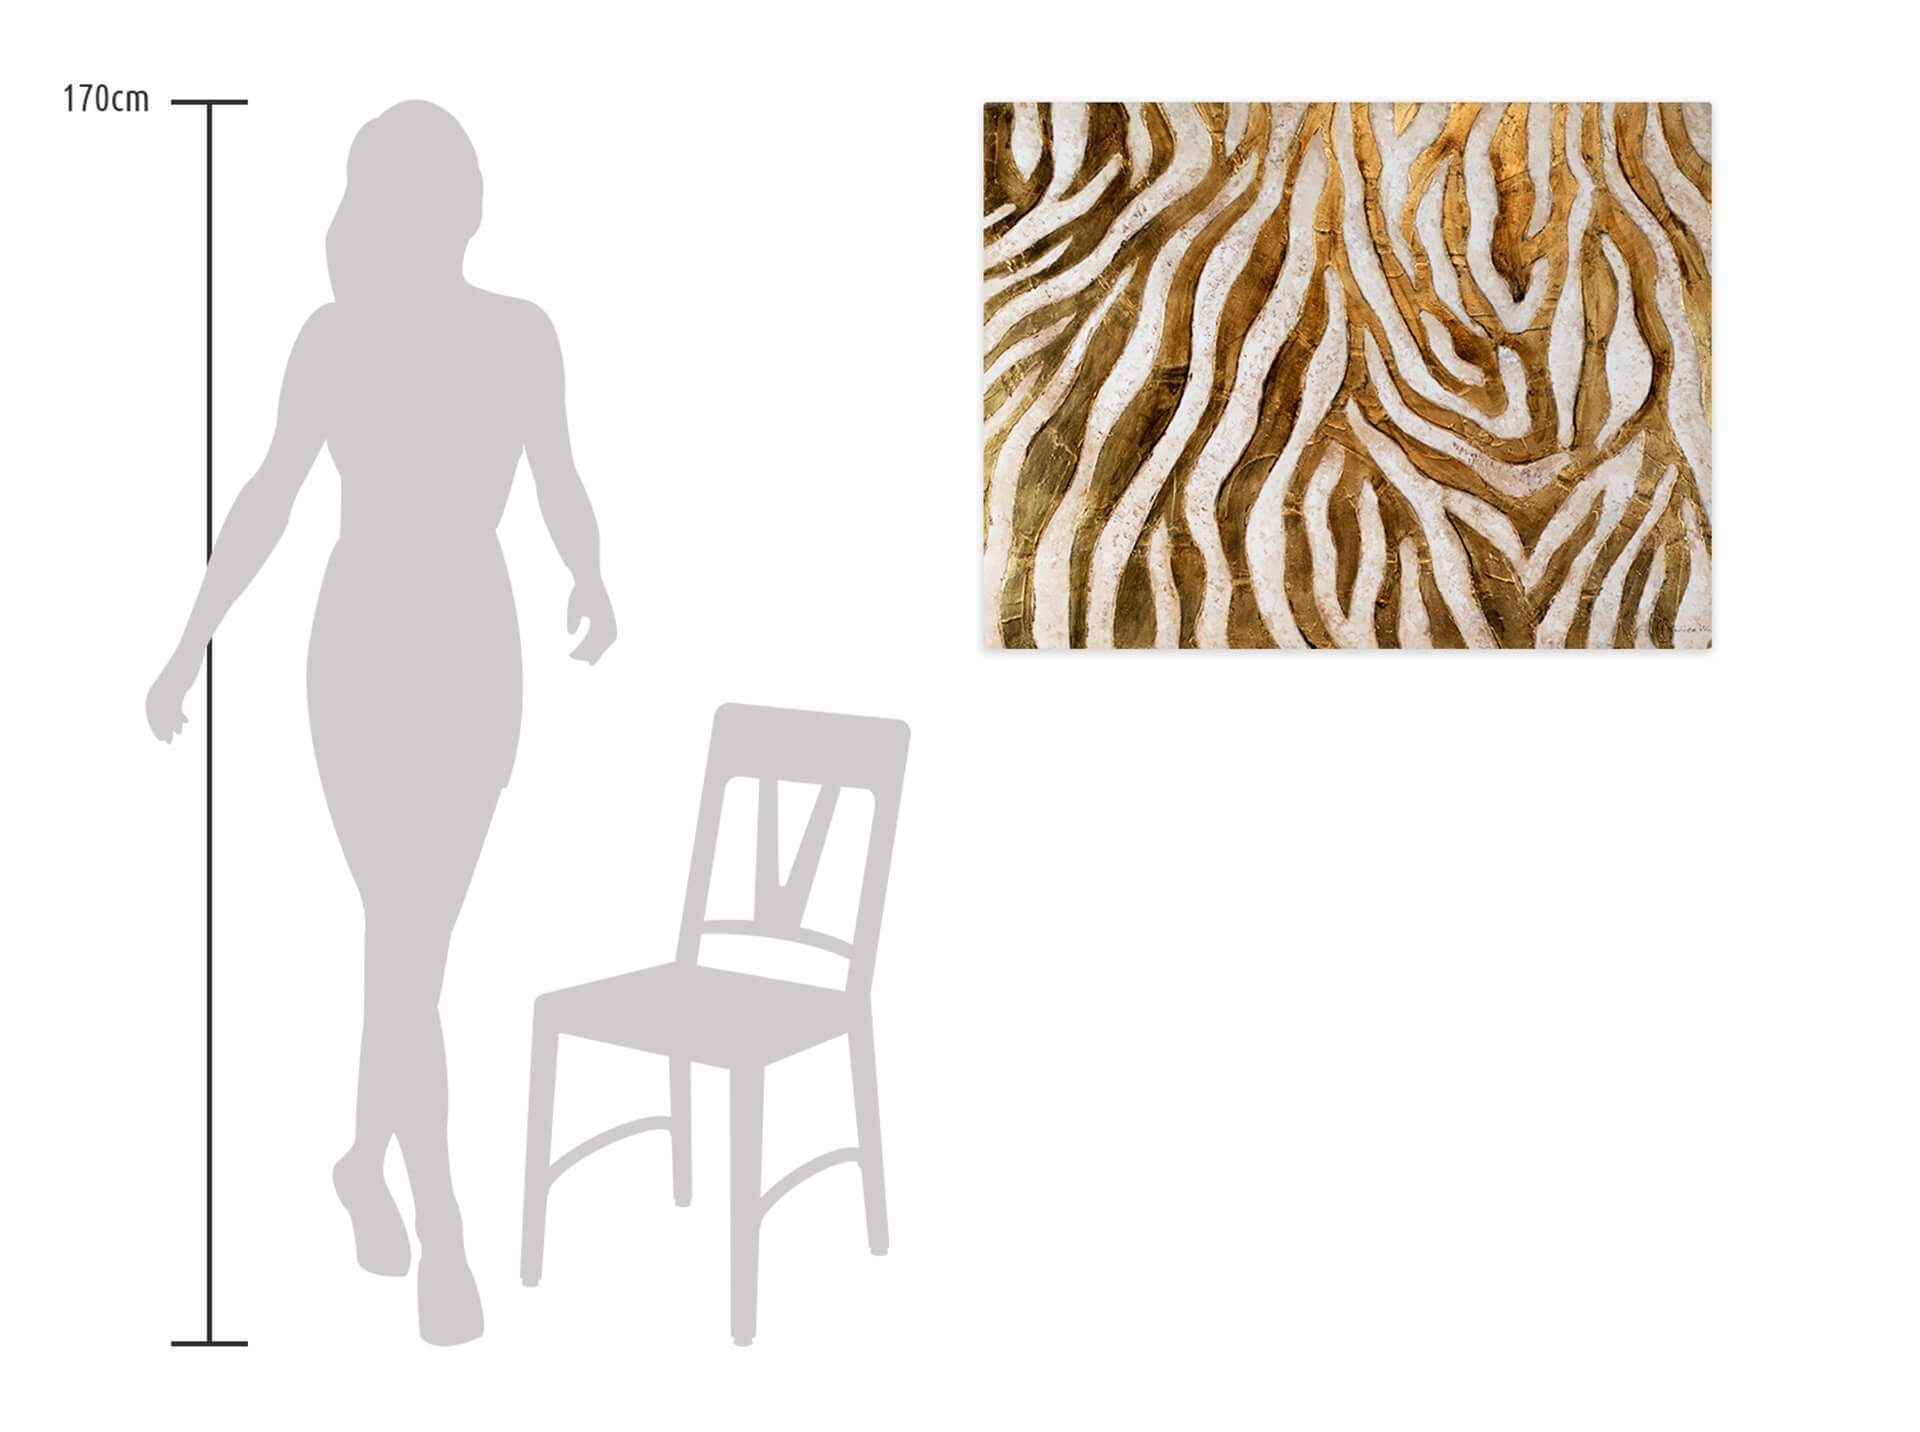 100x75 Leinwandbild HANDGEMALT Golden Wandbild cm, 100% Gemälde Wohnzimmer KUNSTLOFT Zebra